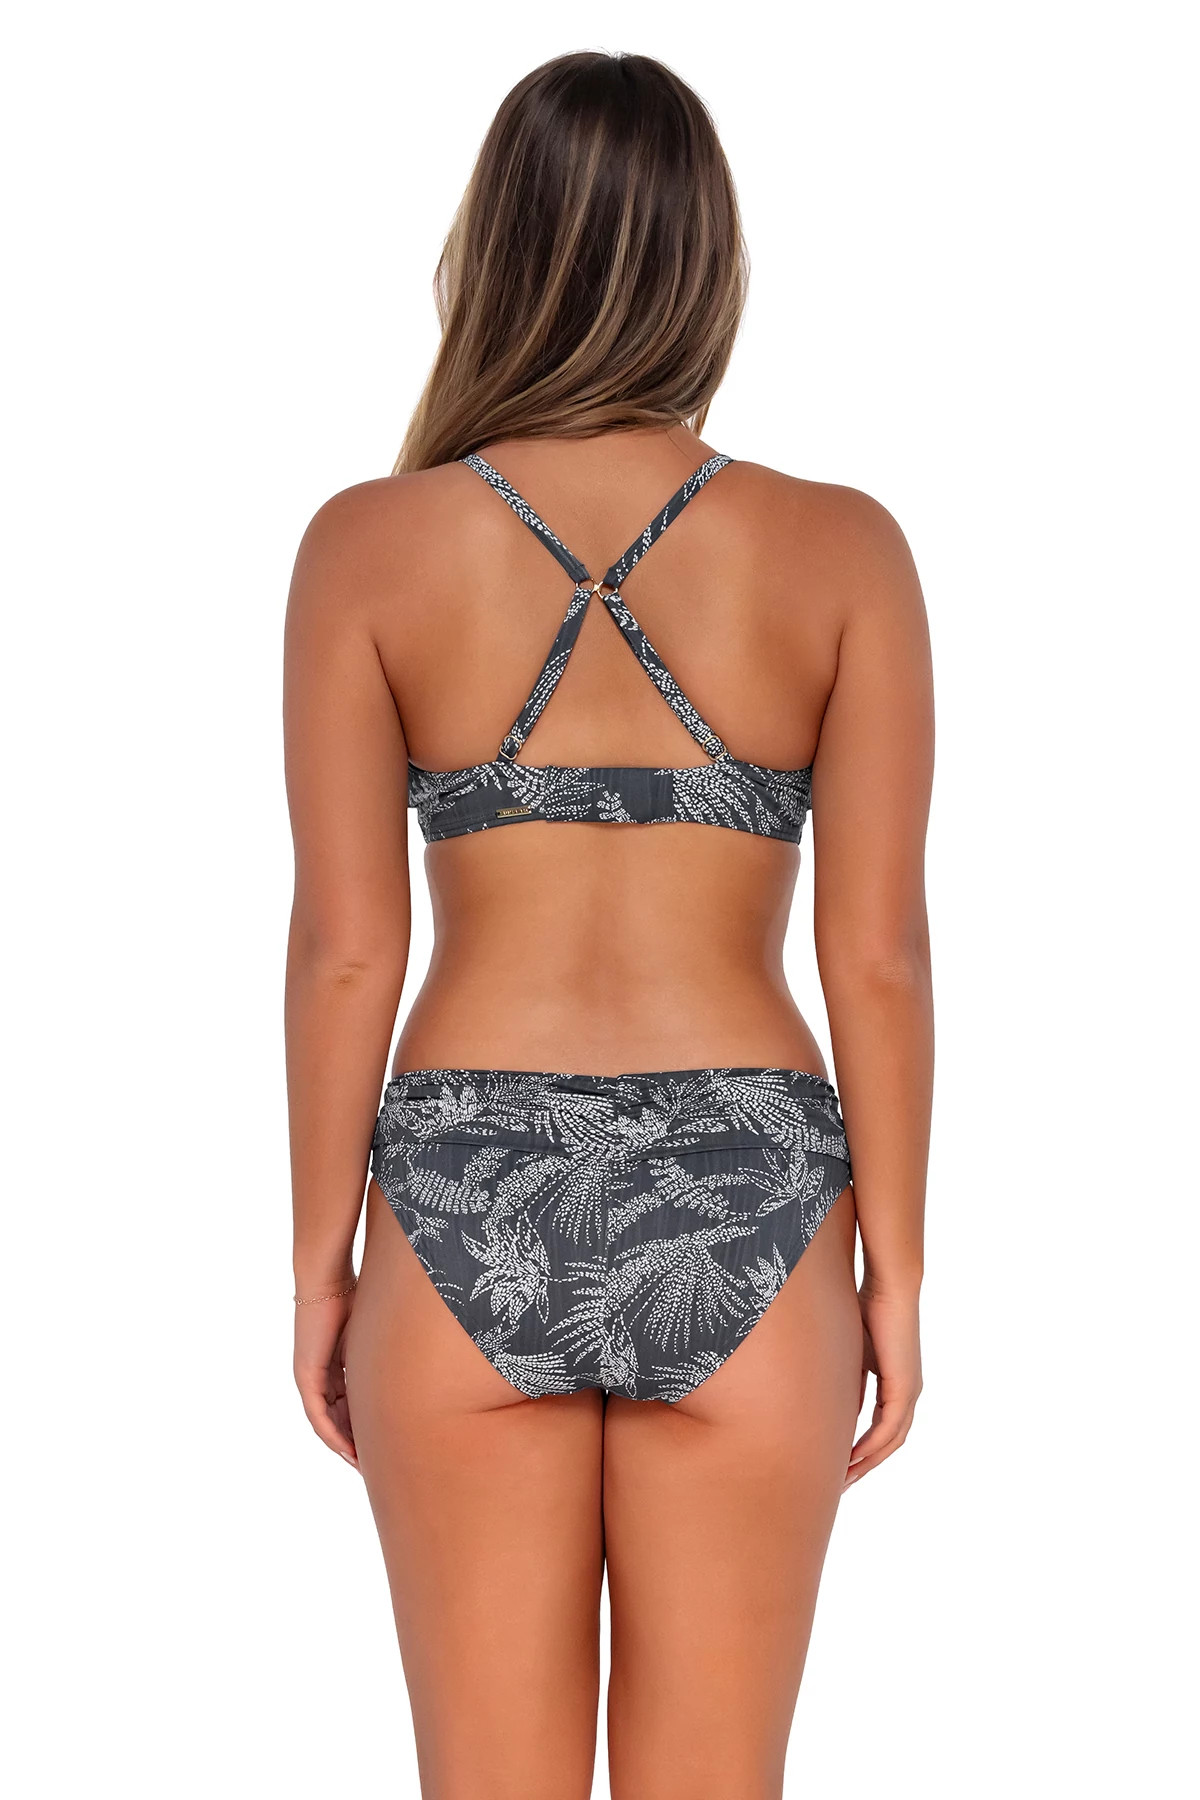 FANFARE SEAGRASS TEXTURE Kauai Keyhole Bralette Bikini Top (E-H Cup) image number 3